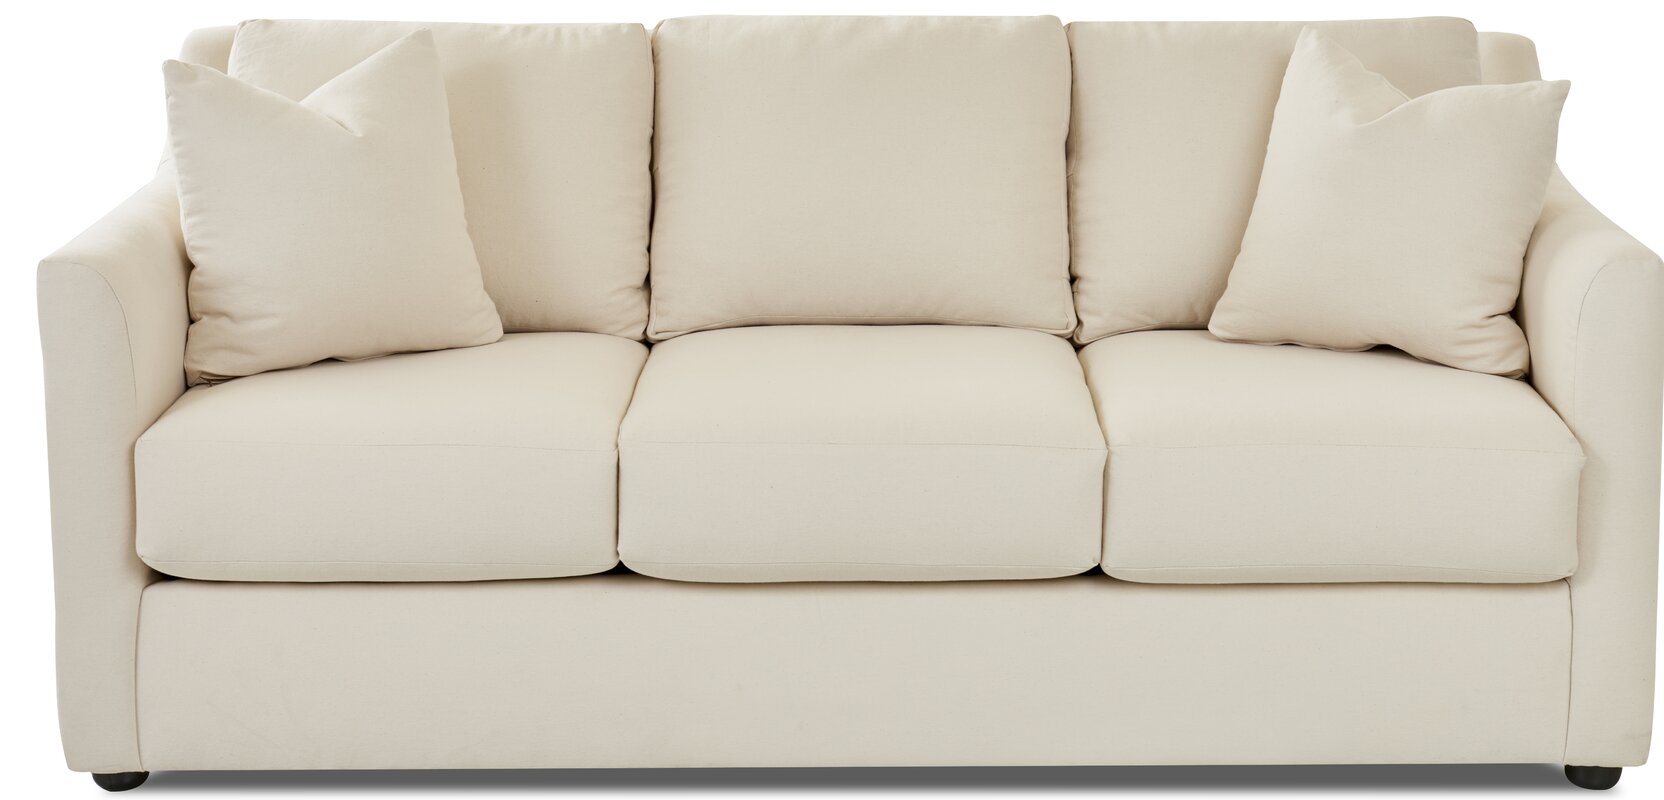 wayfair sofa beds with storage